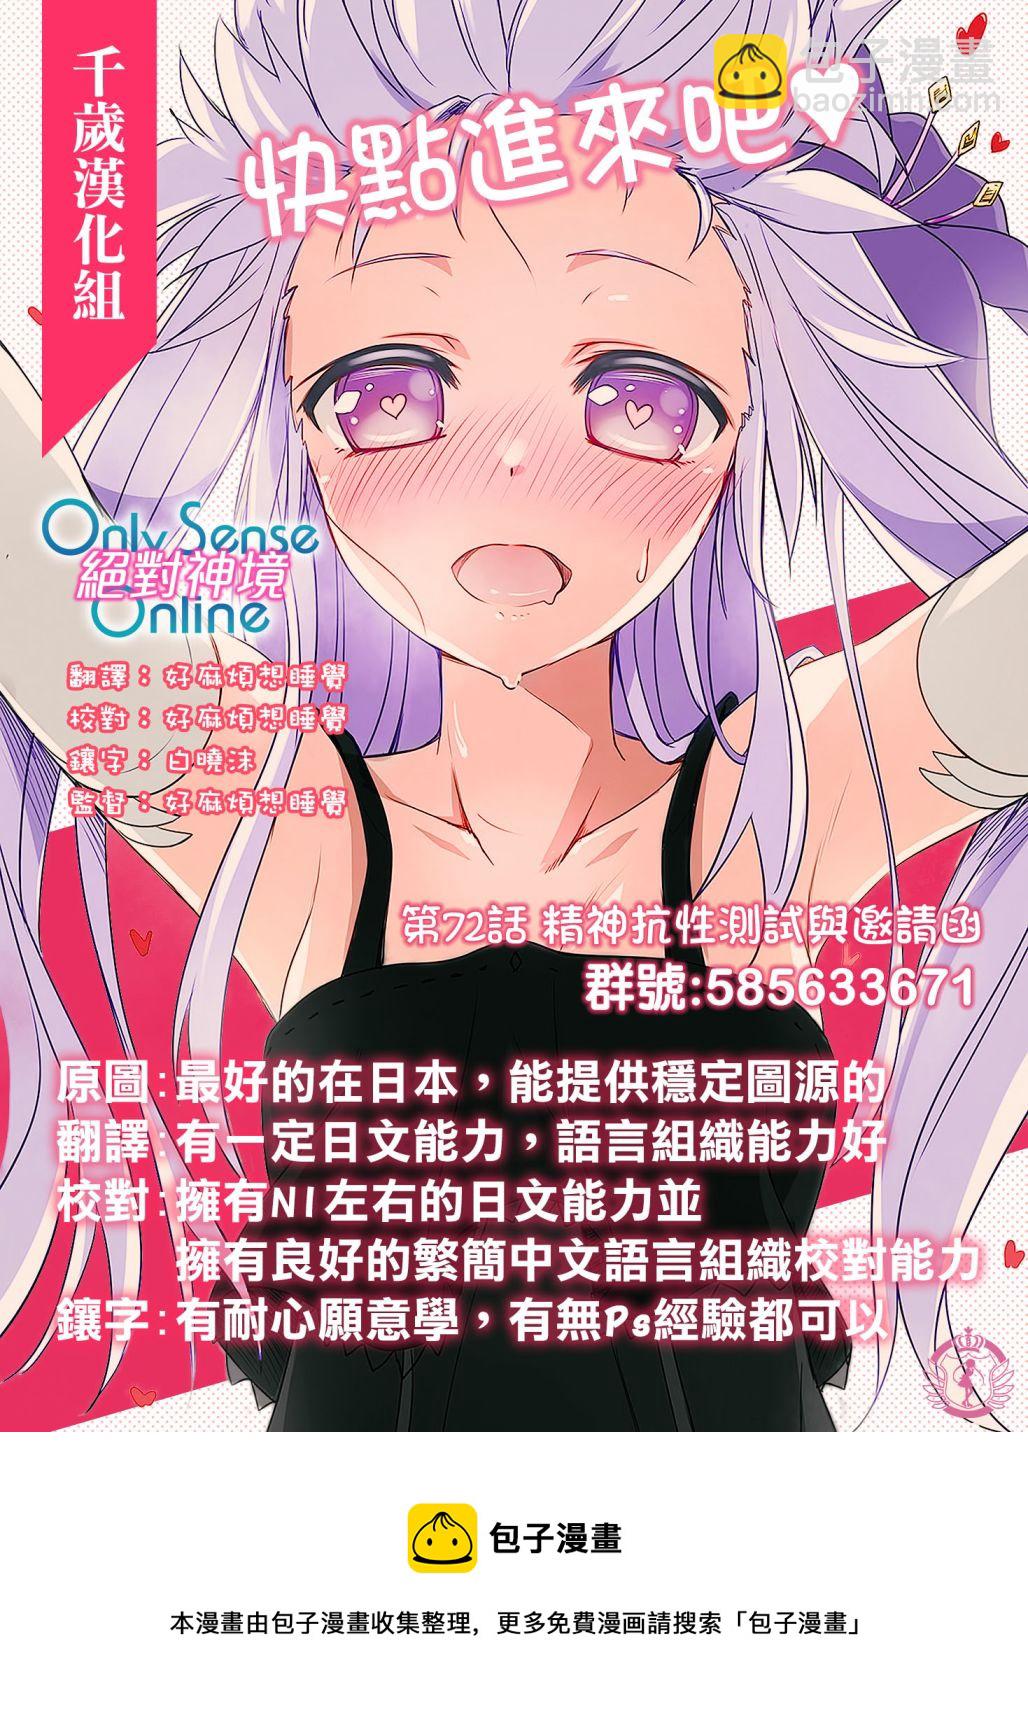 Only Sense Online - 第72話 - 5